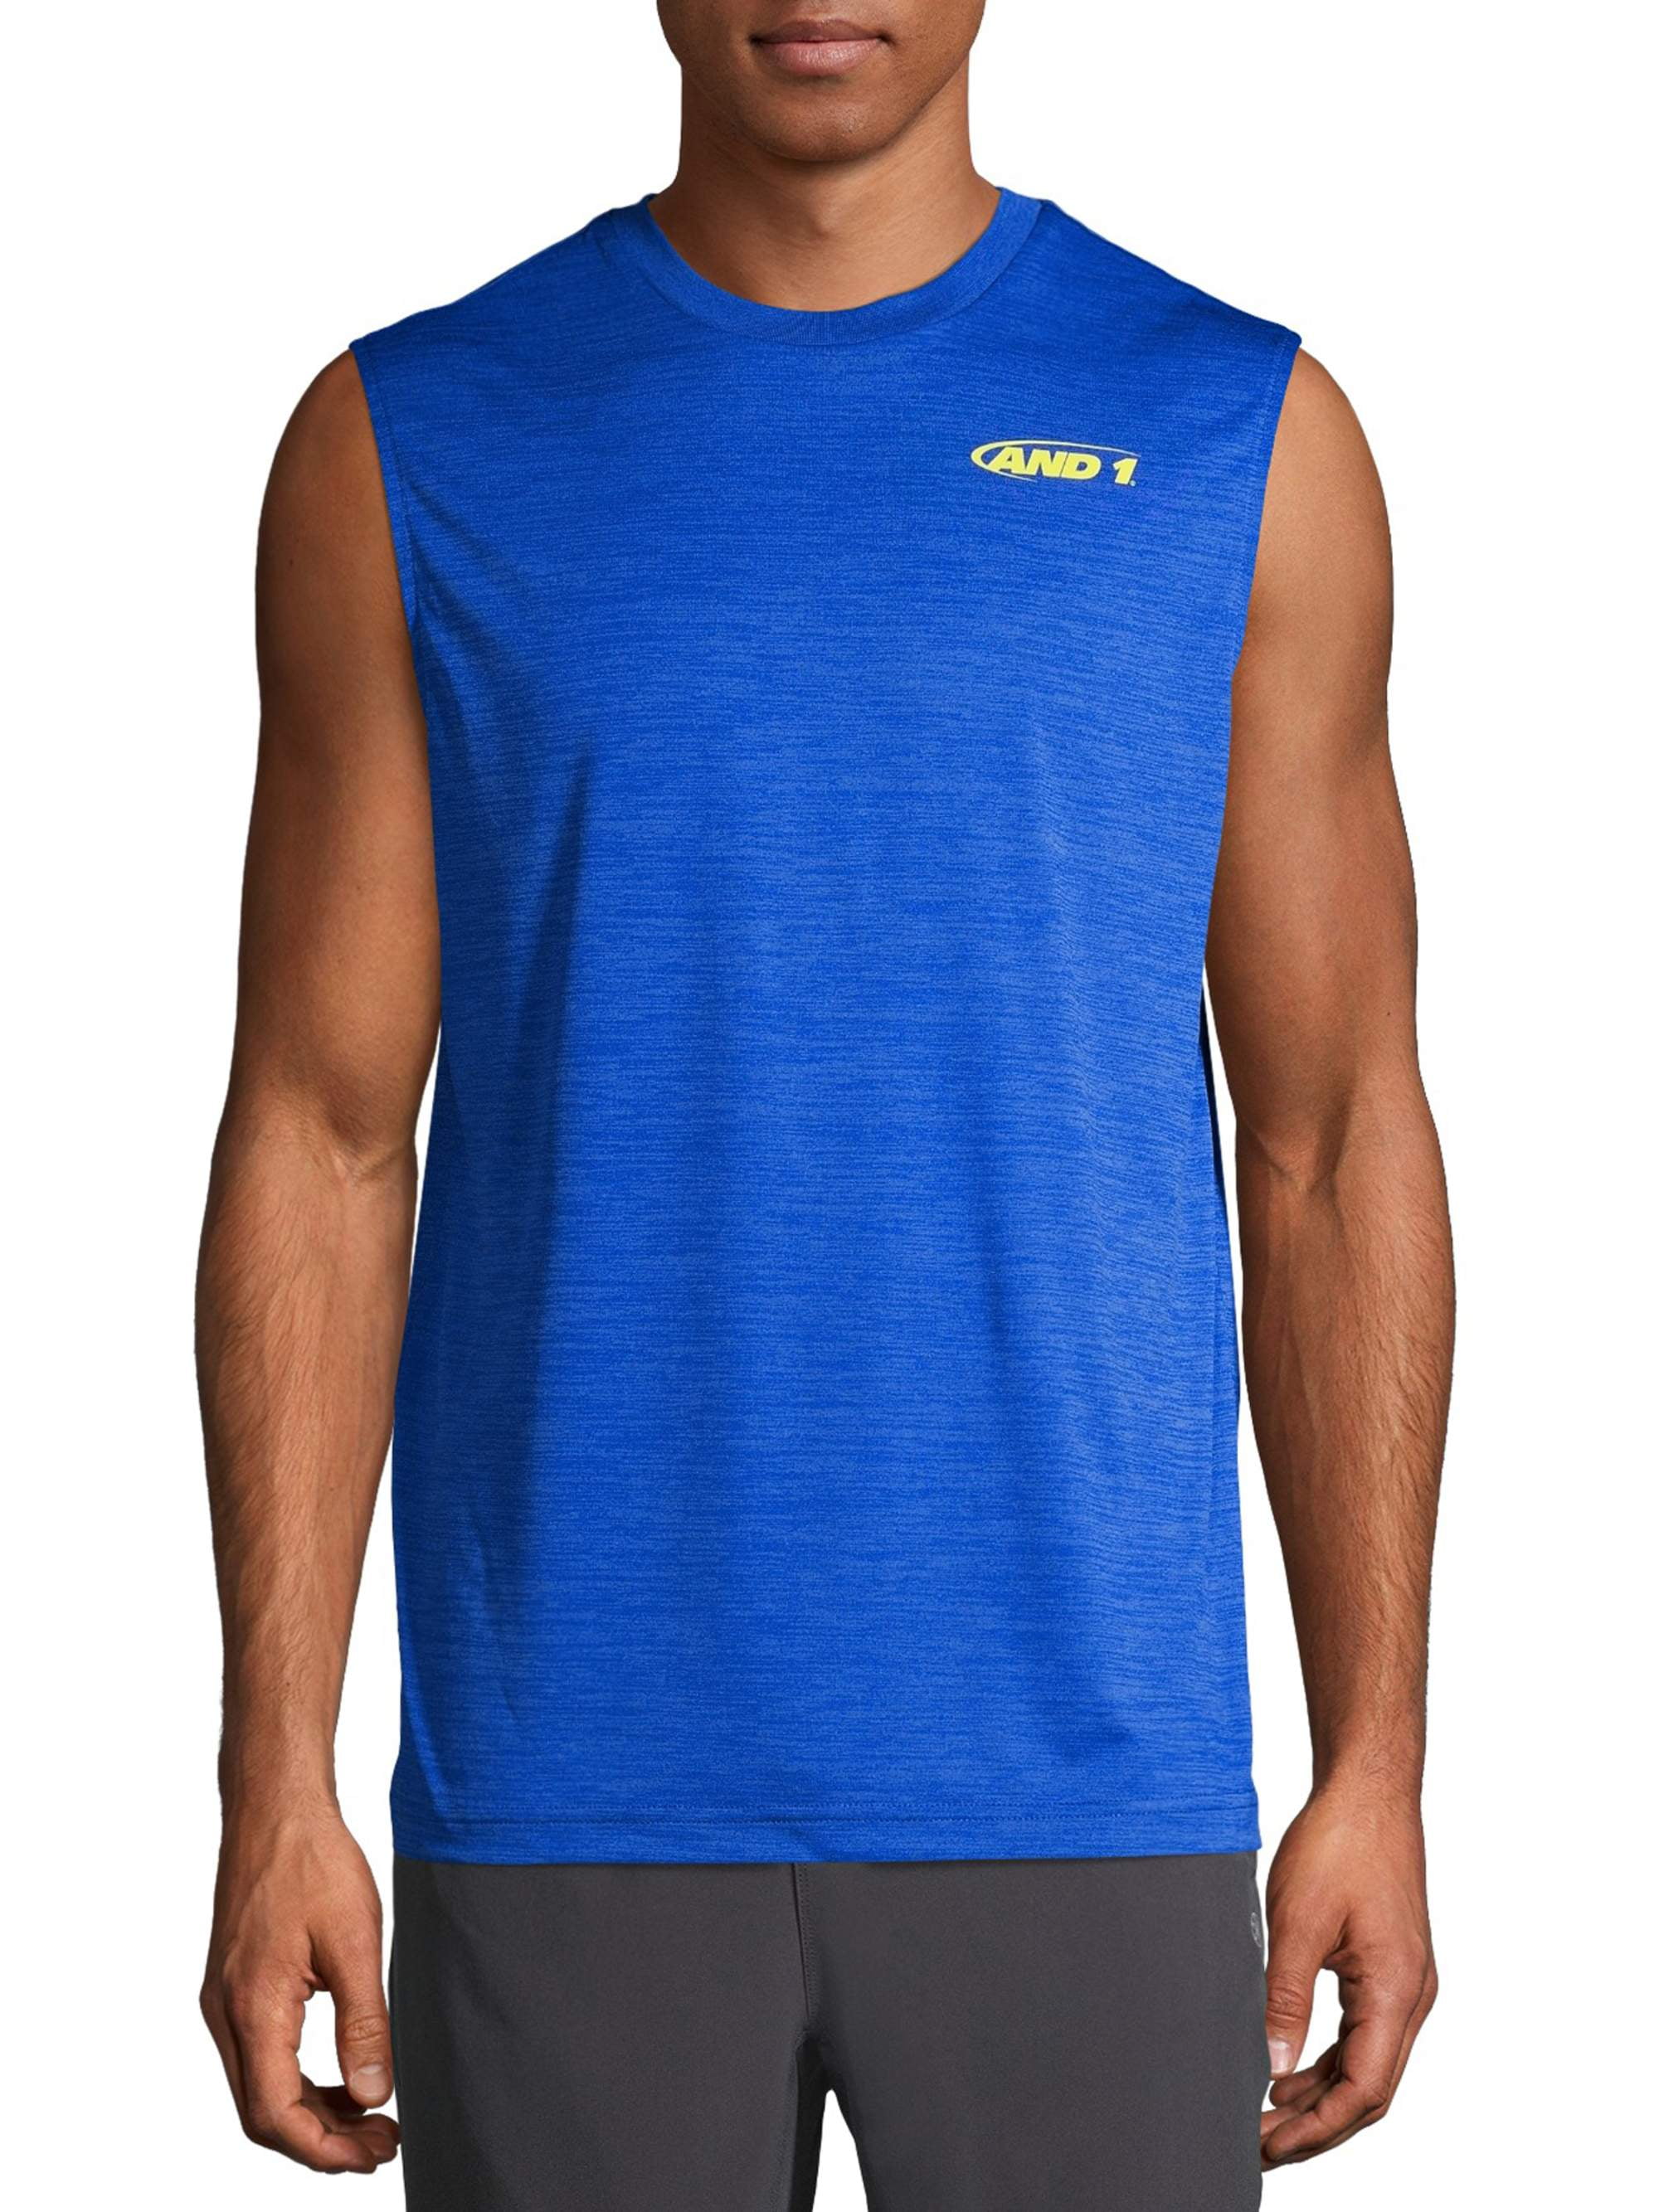 AND1 Men's Asphalt Sleeveless Muscle Tank Top, up to 2XL - Walmart.com